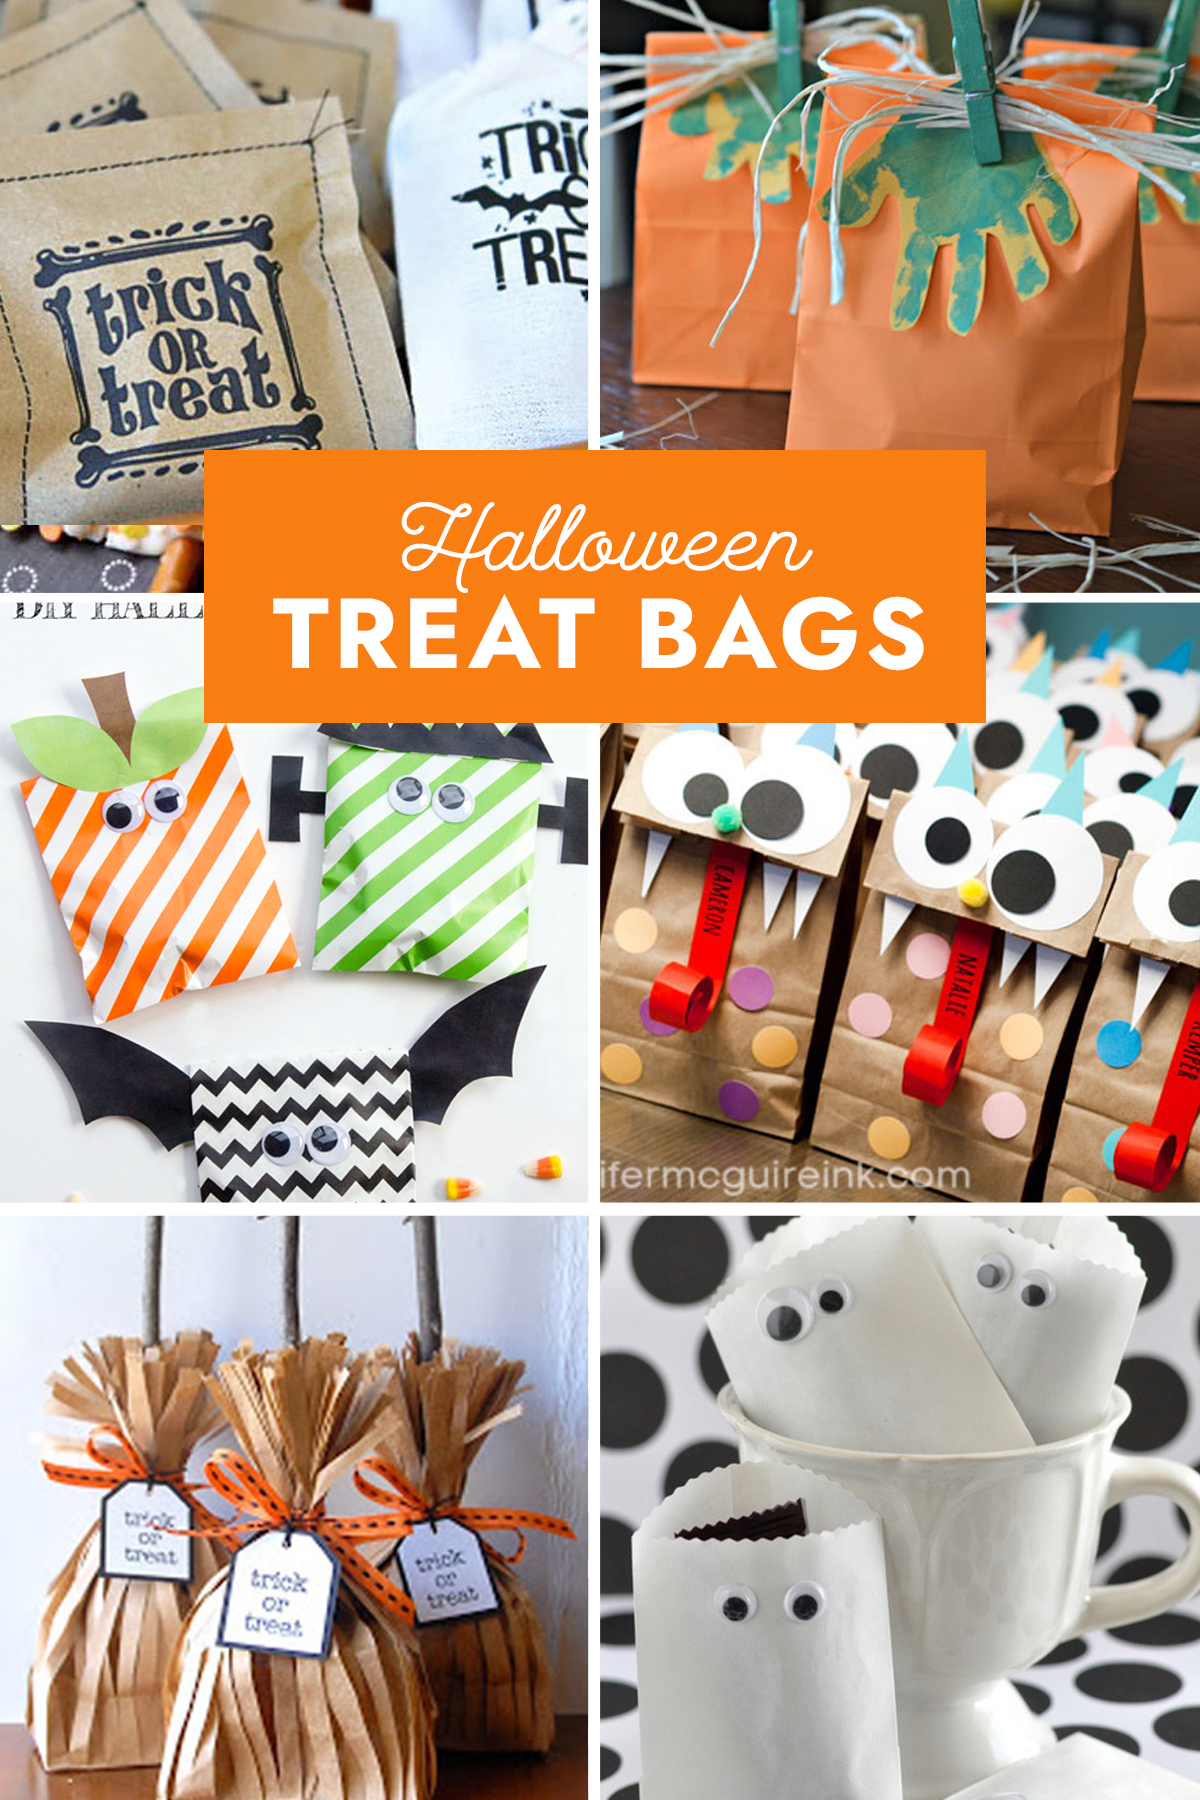 How to Make Halloween Treat Bags - Hobbies on a Budget